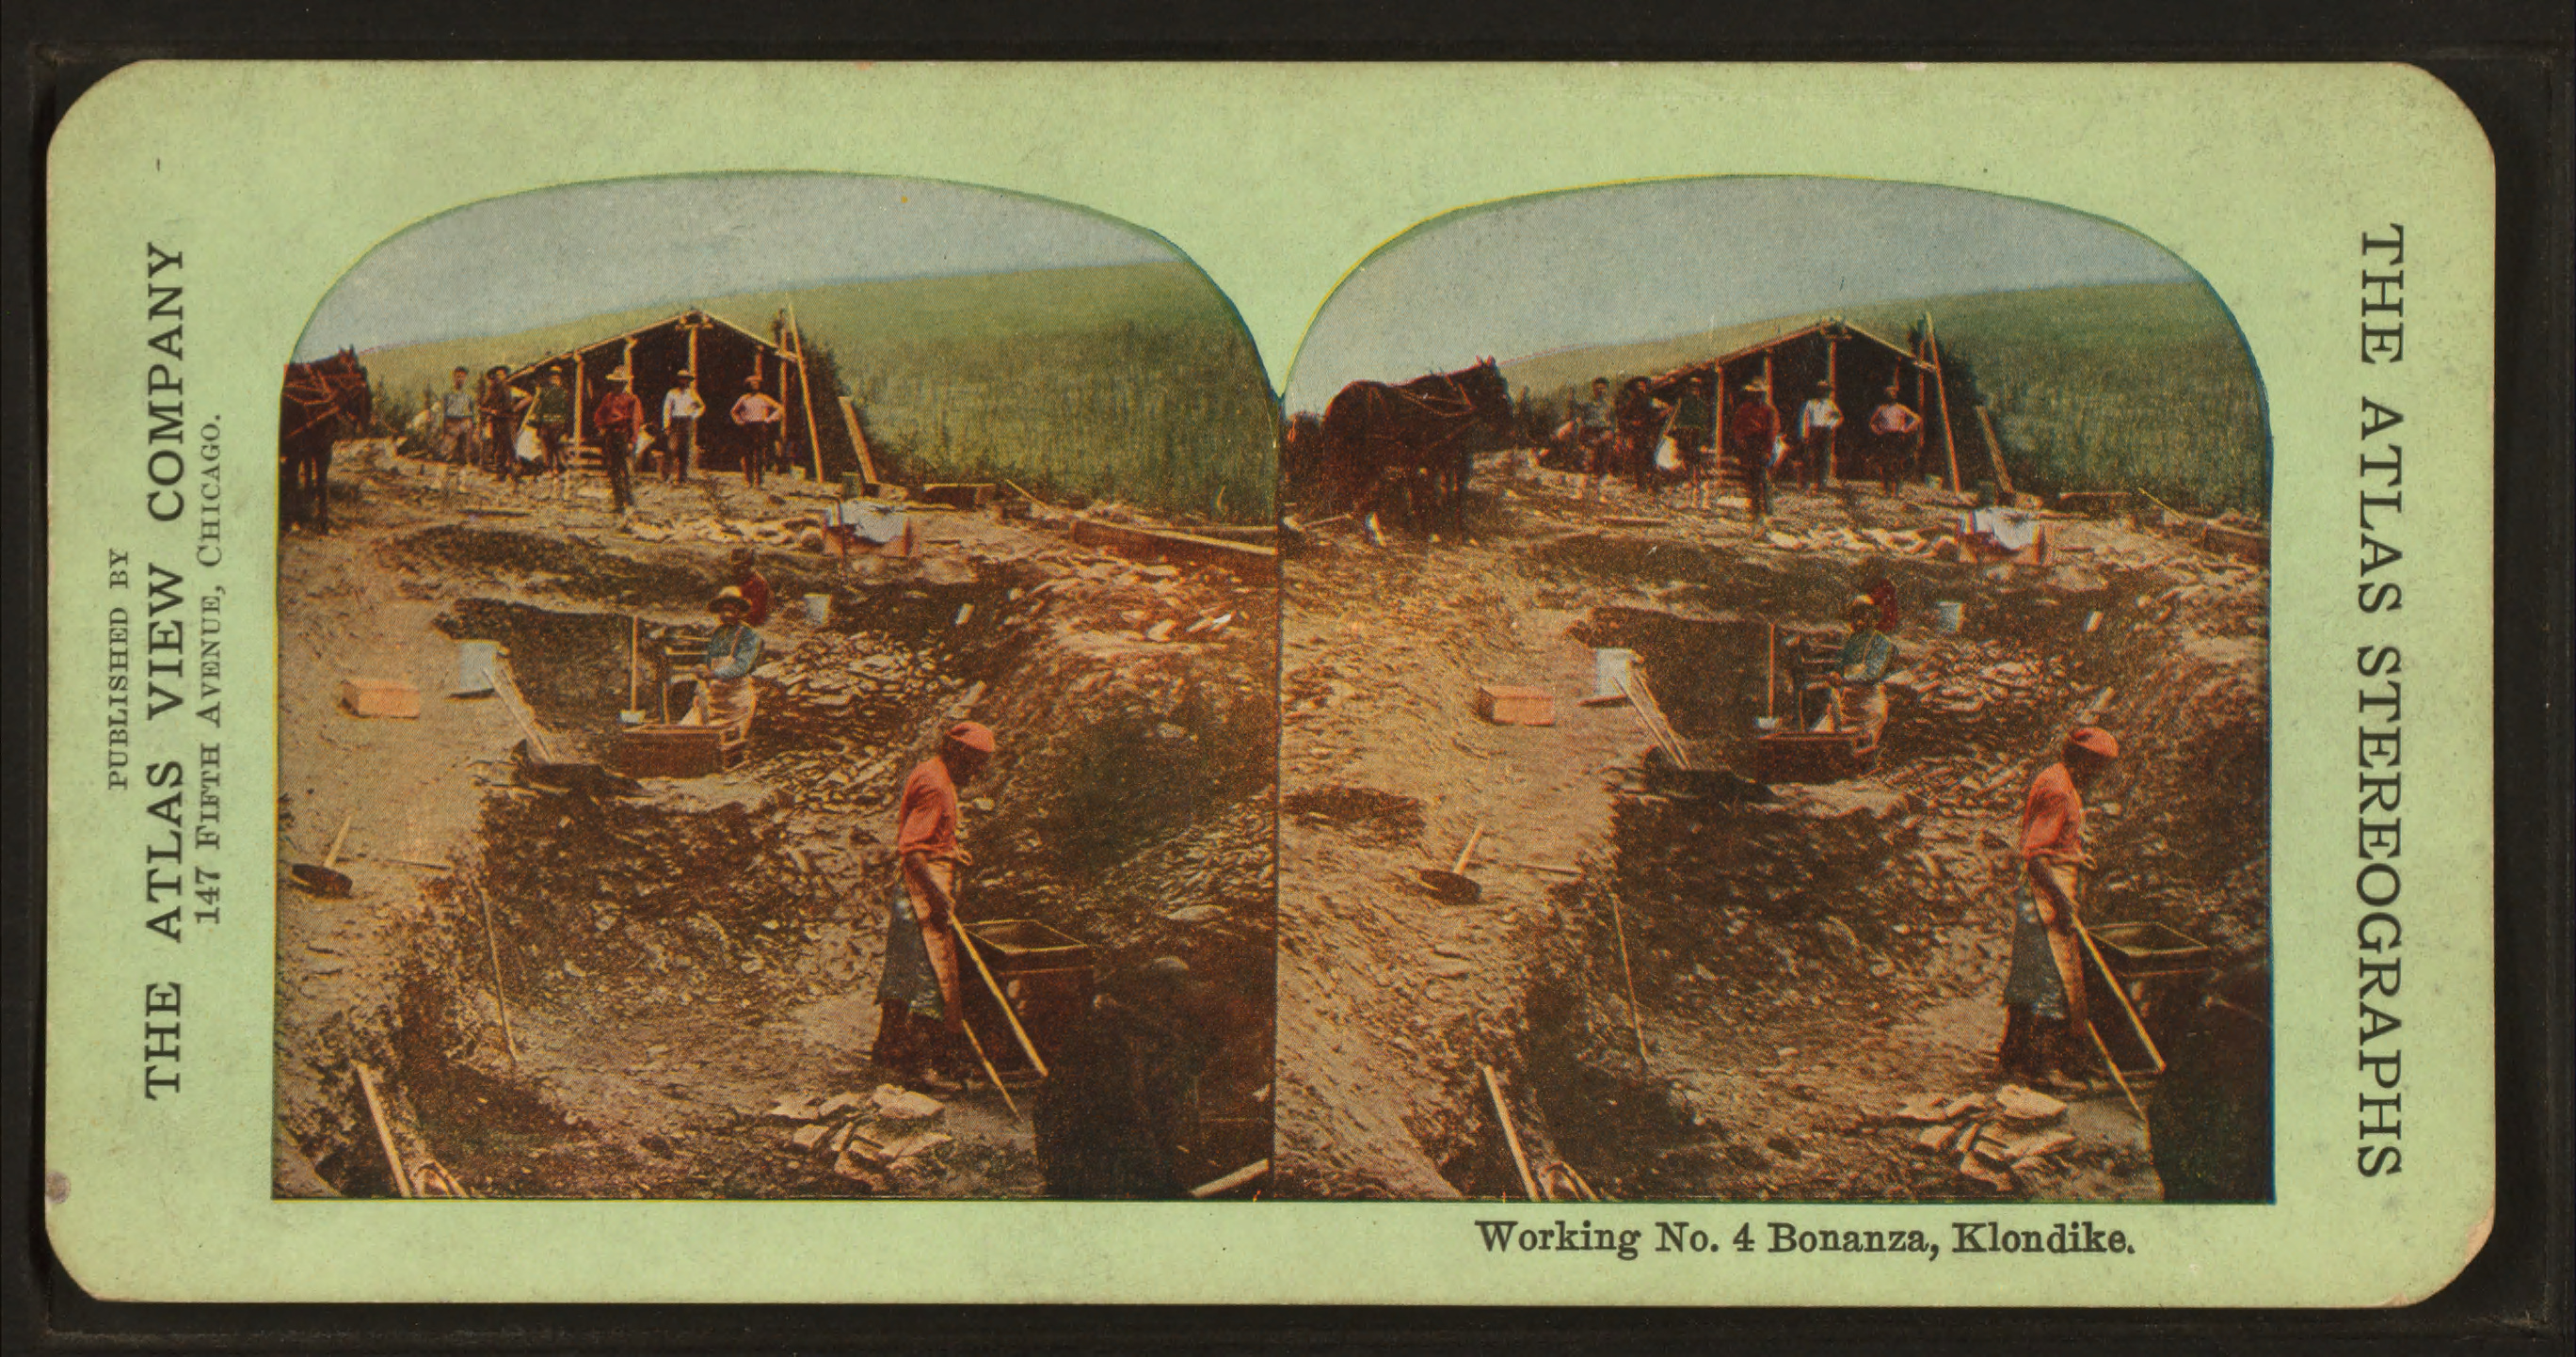 Working No. 4 Bonanza, Klondike, from Robert N. Dennis collection of stereoscopic views